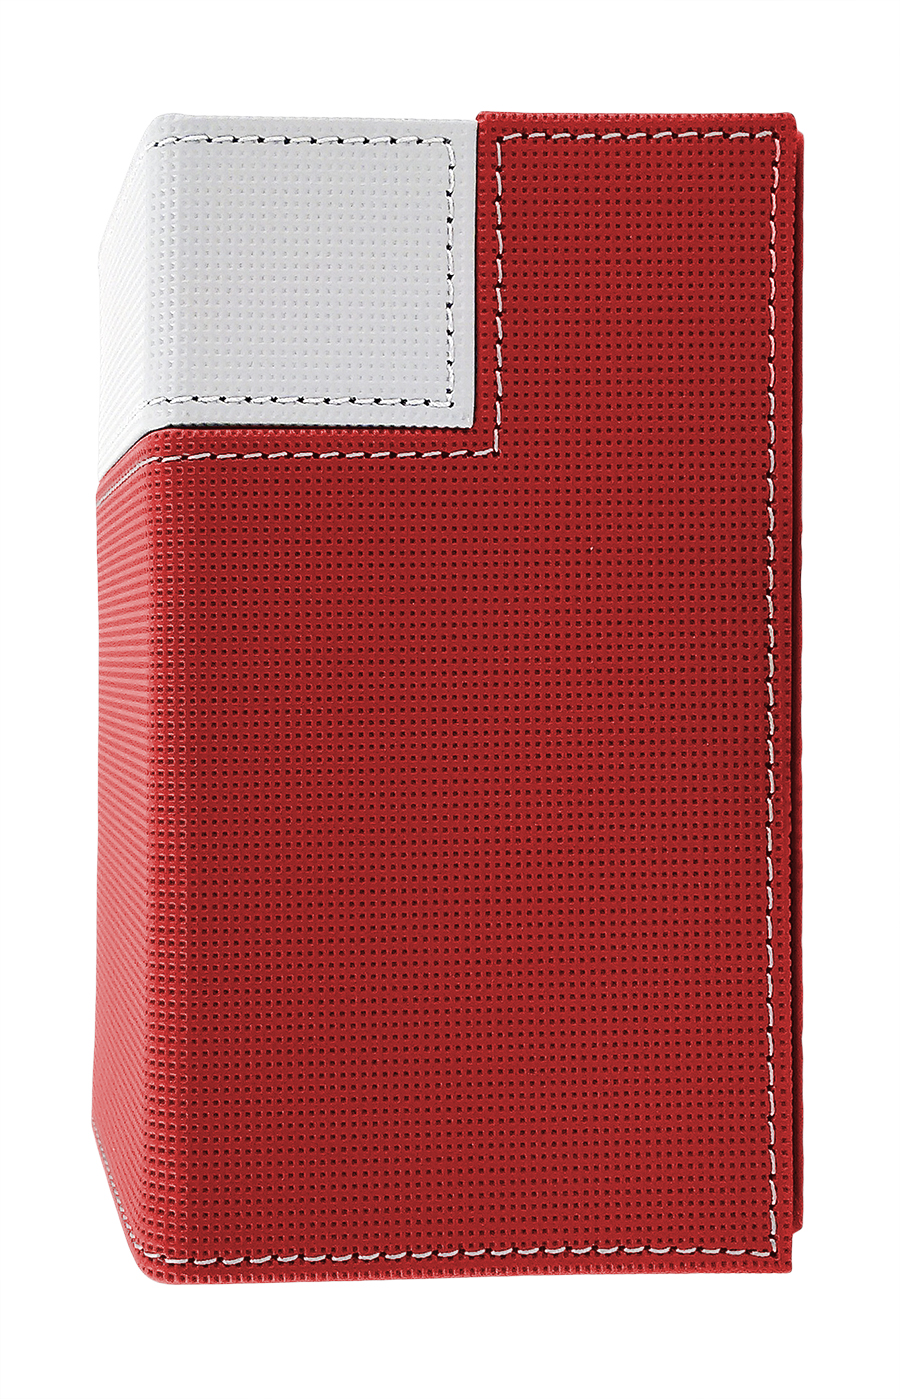 ultra-uro-m2-deckbox-red-and-white-20151229.jpg